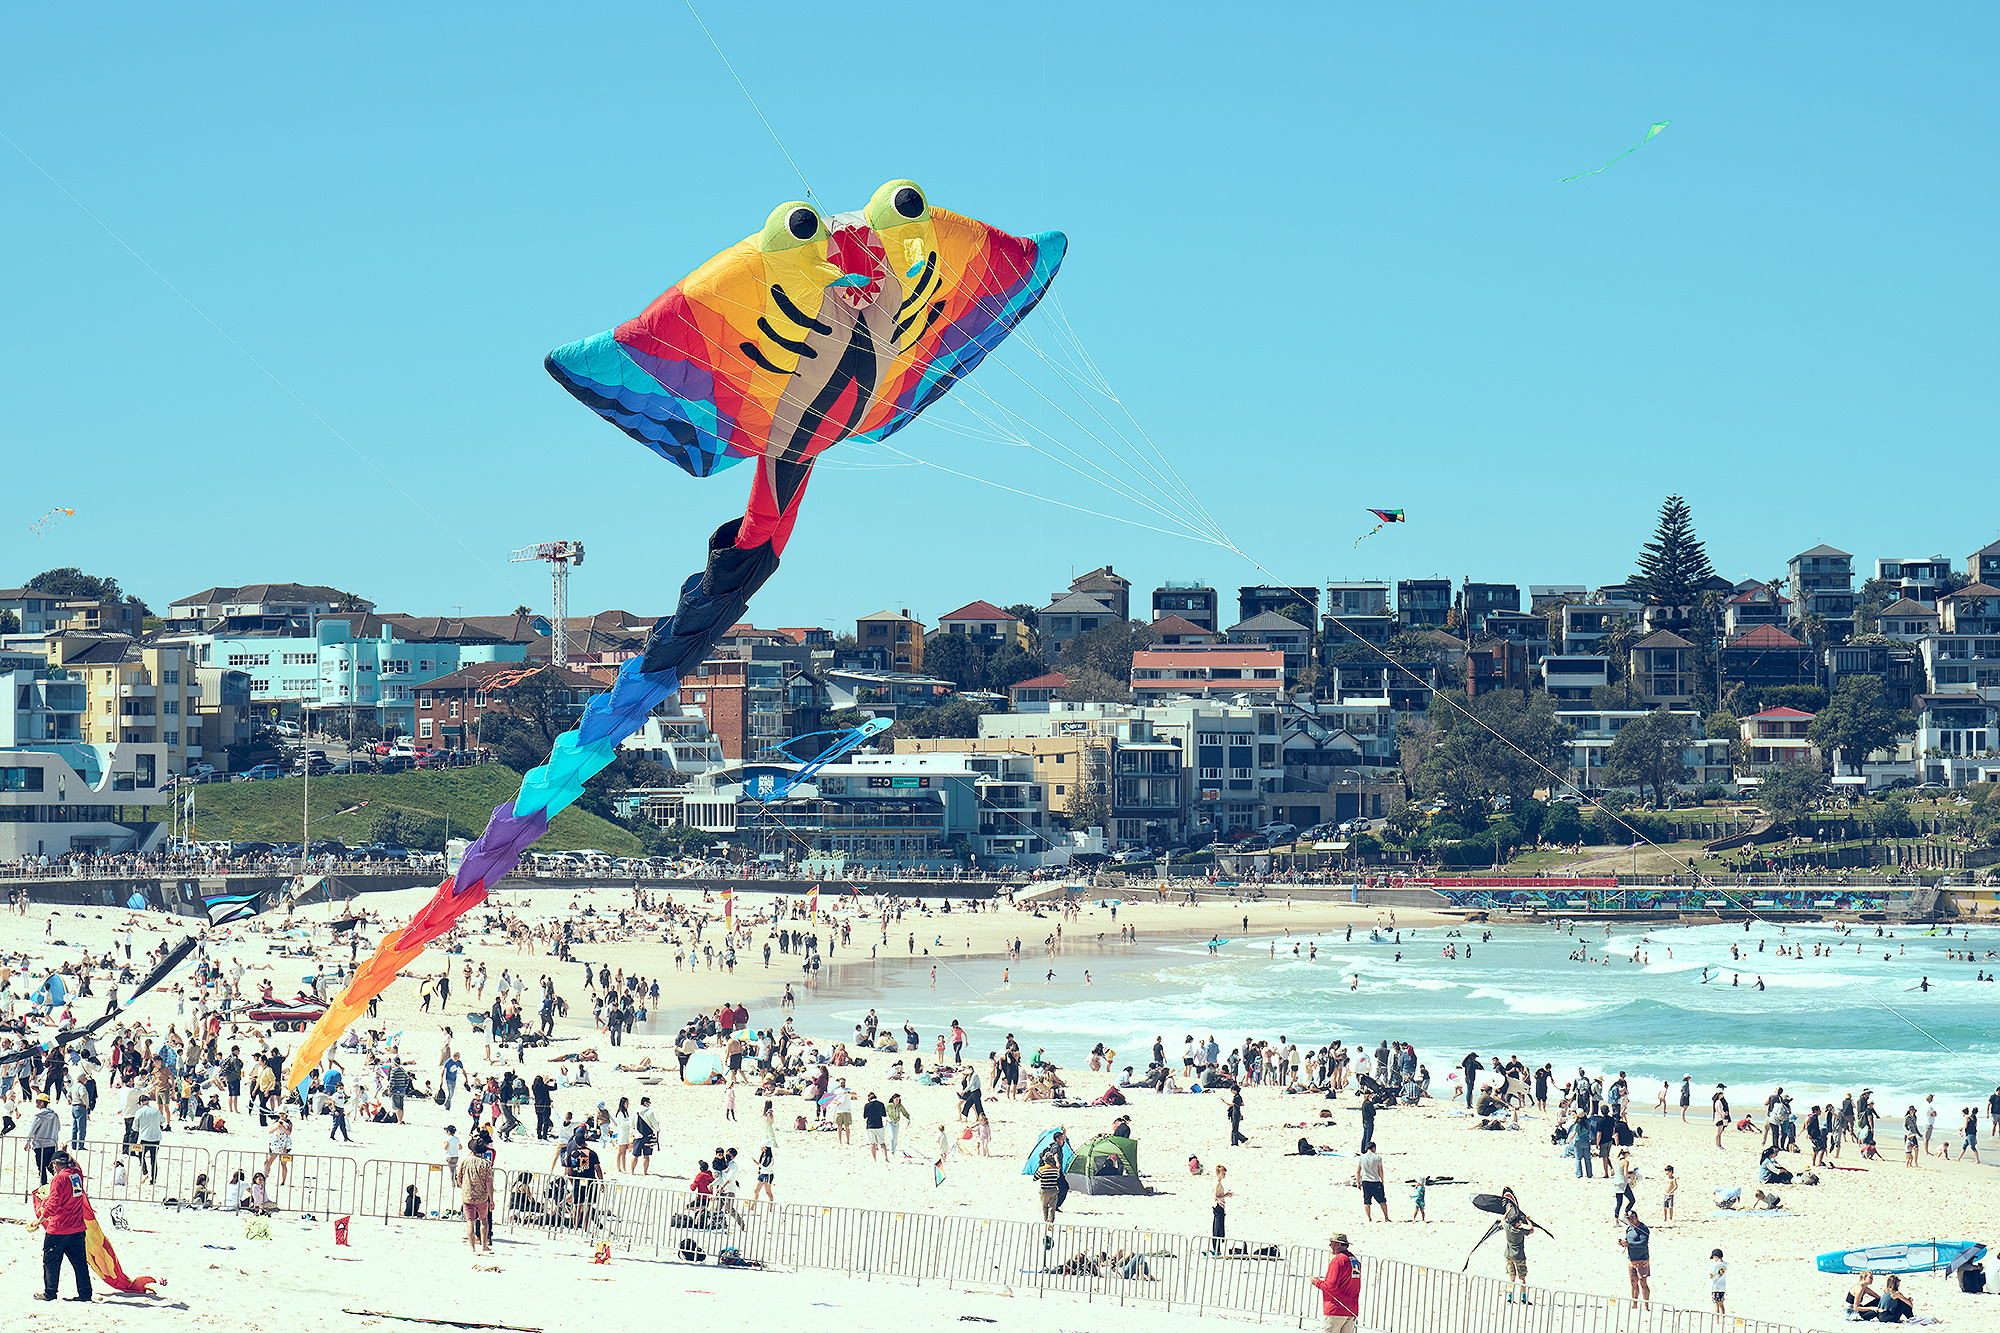 Good weather and kites = very busy Bondi!